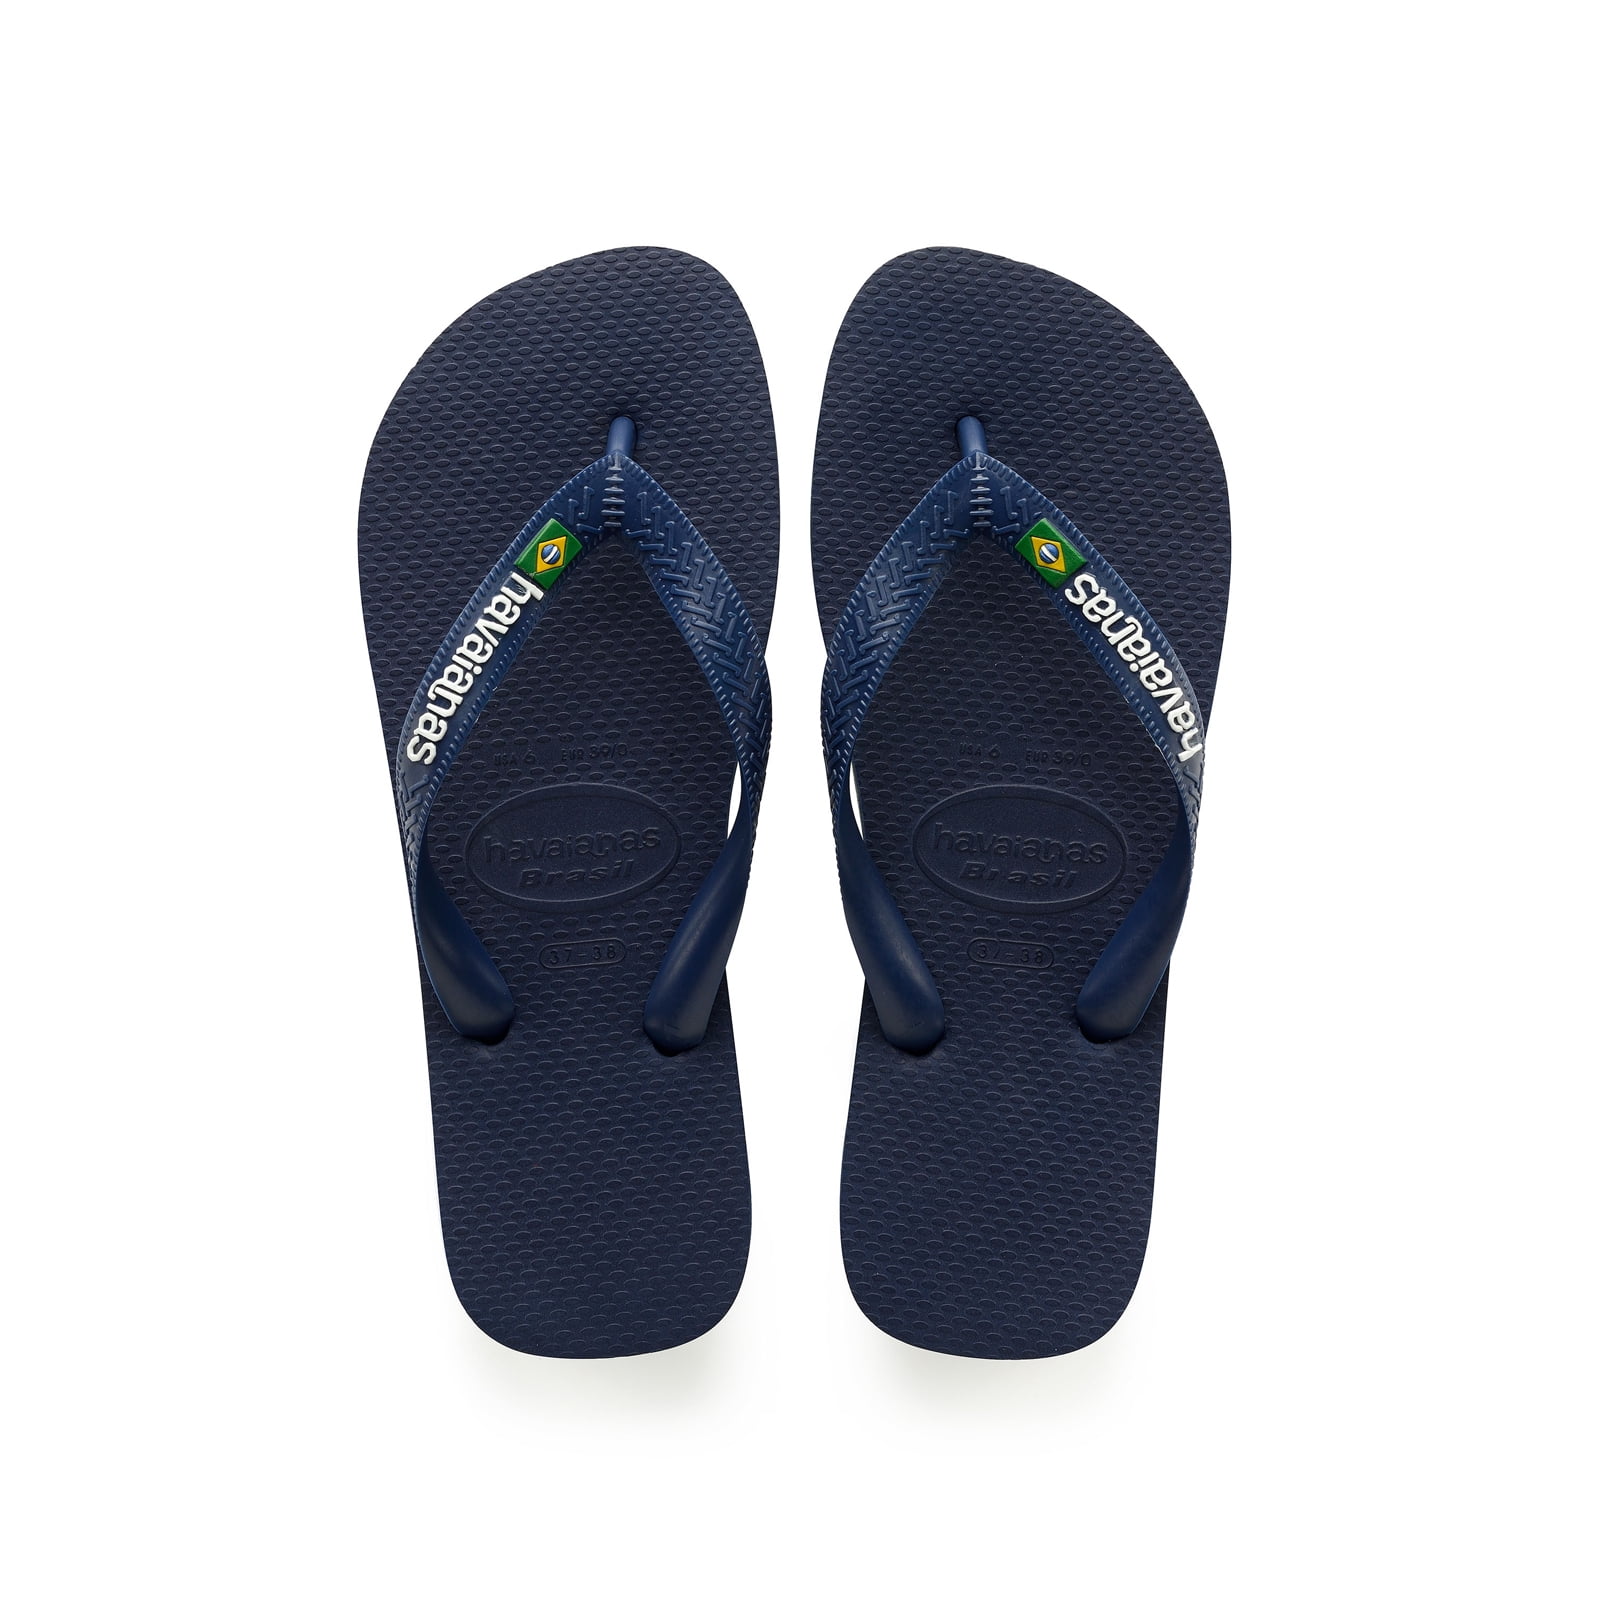 Havaianas Mens Brazil Logo Flip Flop Sandals